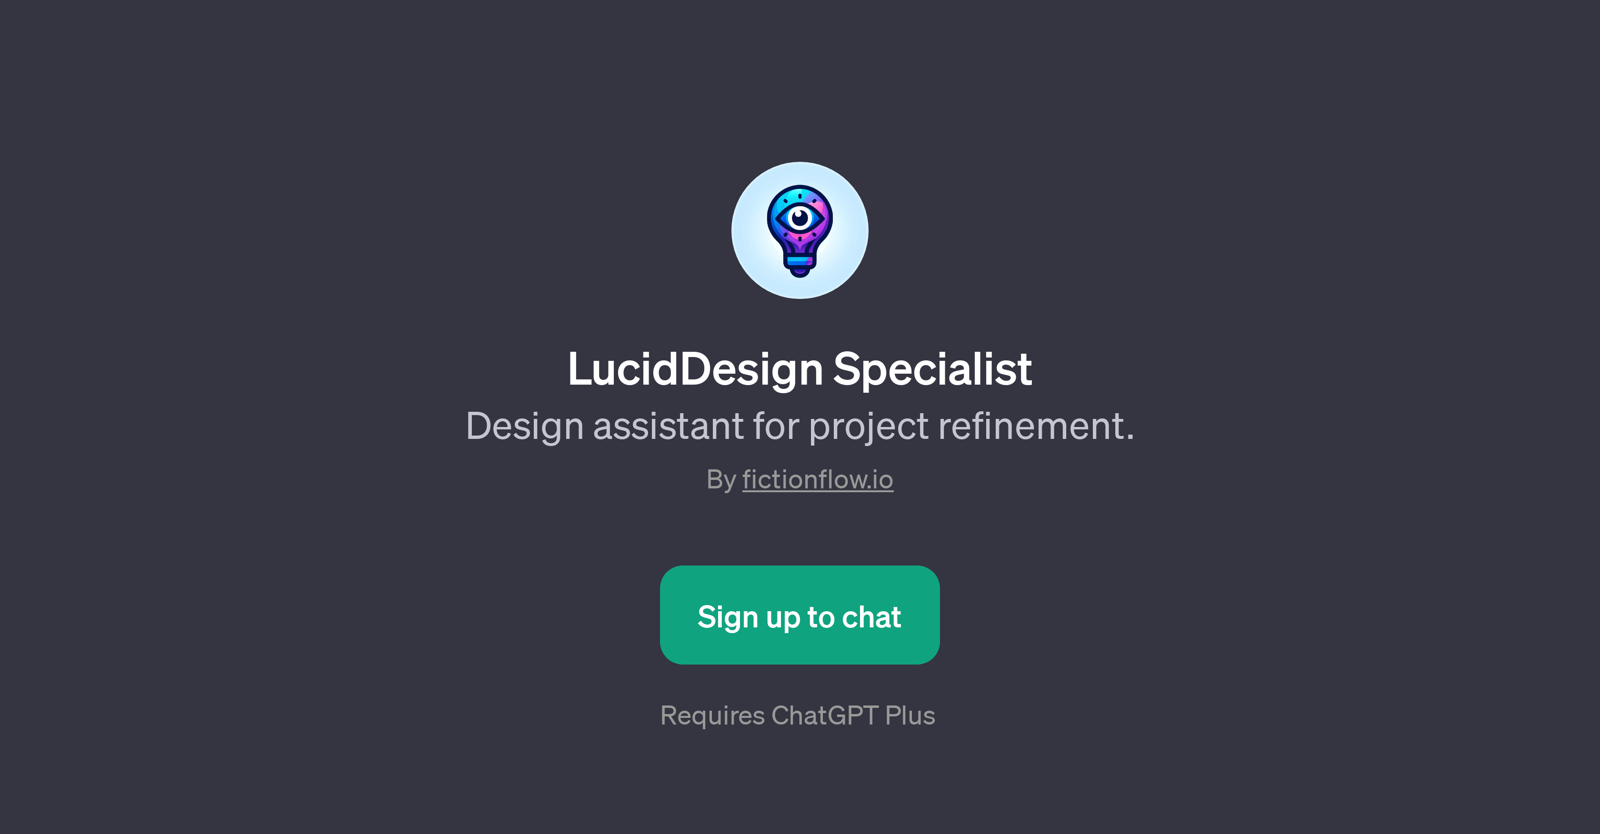 LucidDesign Specialist website